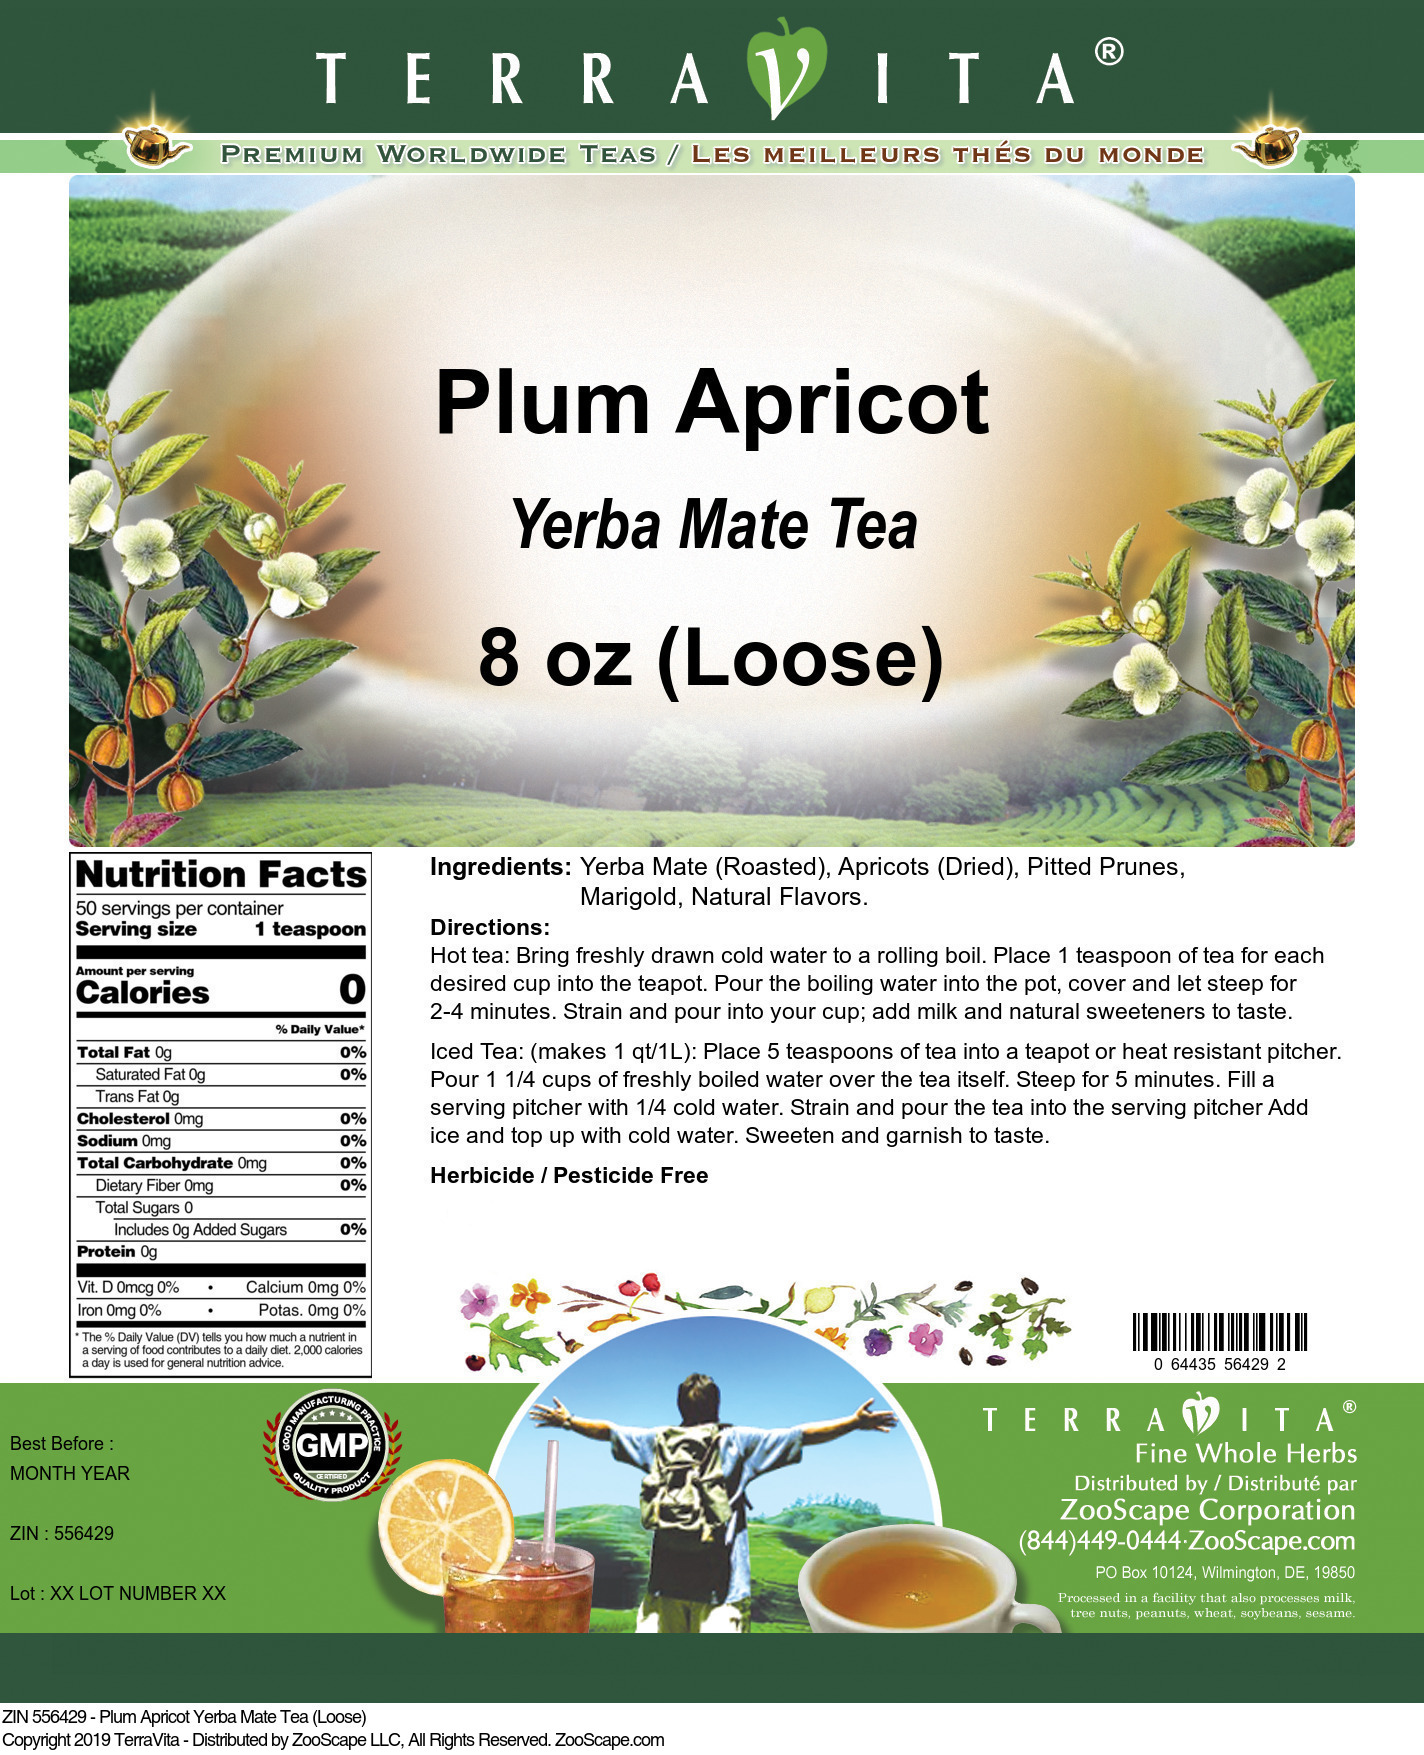 Plum Apricot Yerba Mate Tea (Loose) - Label